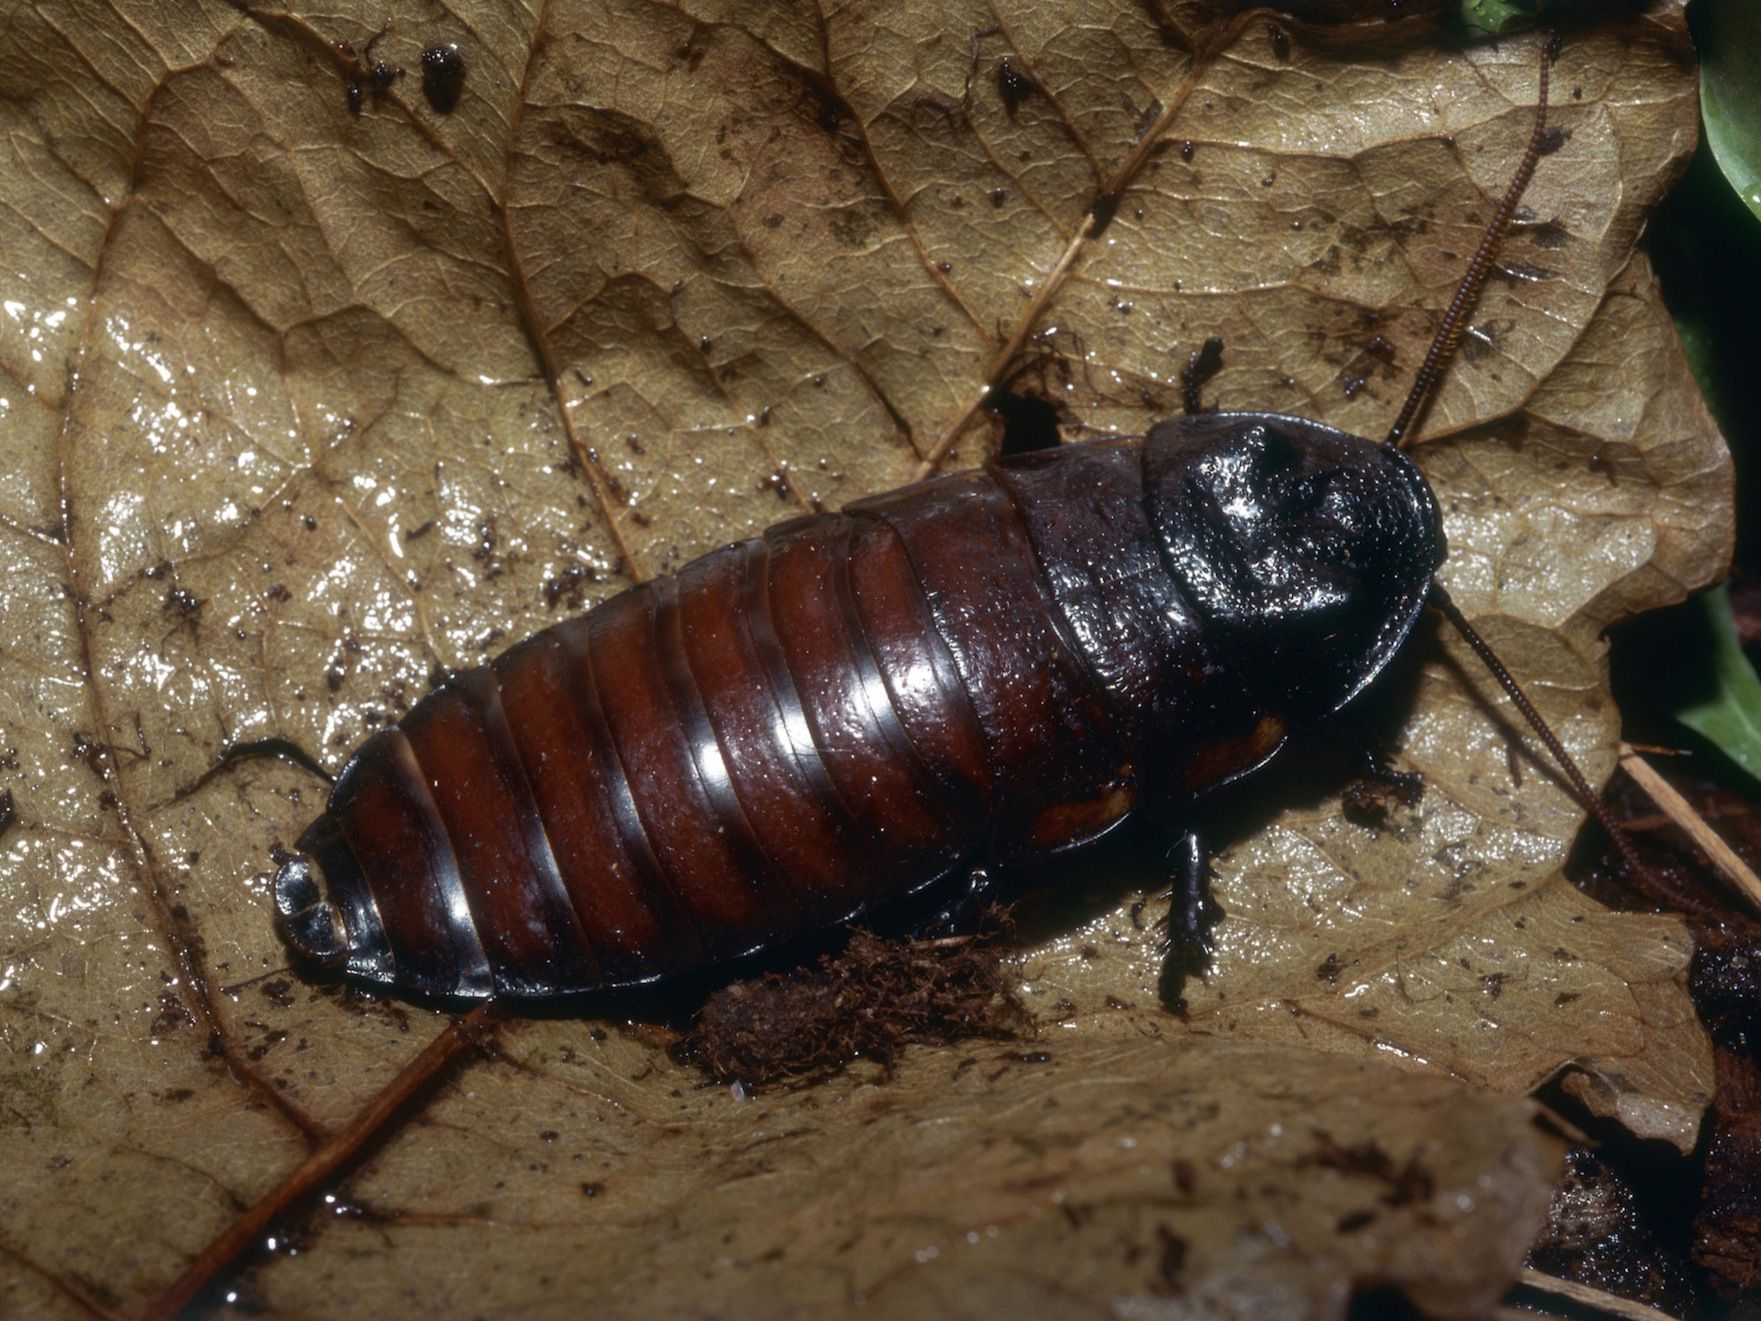 Image of Madagascar Hissing Cockroach